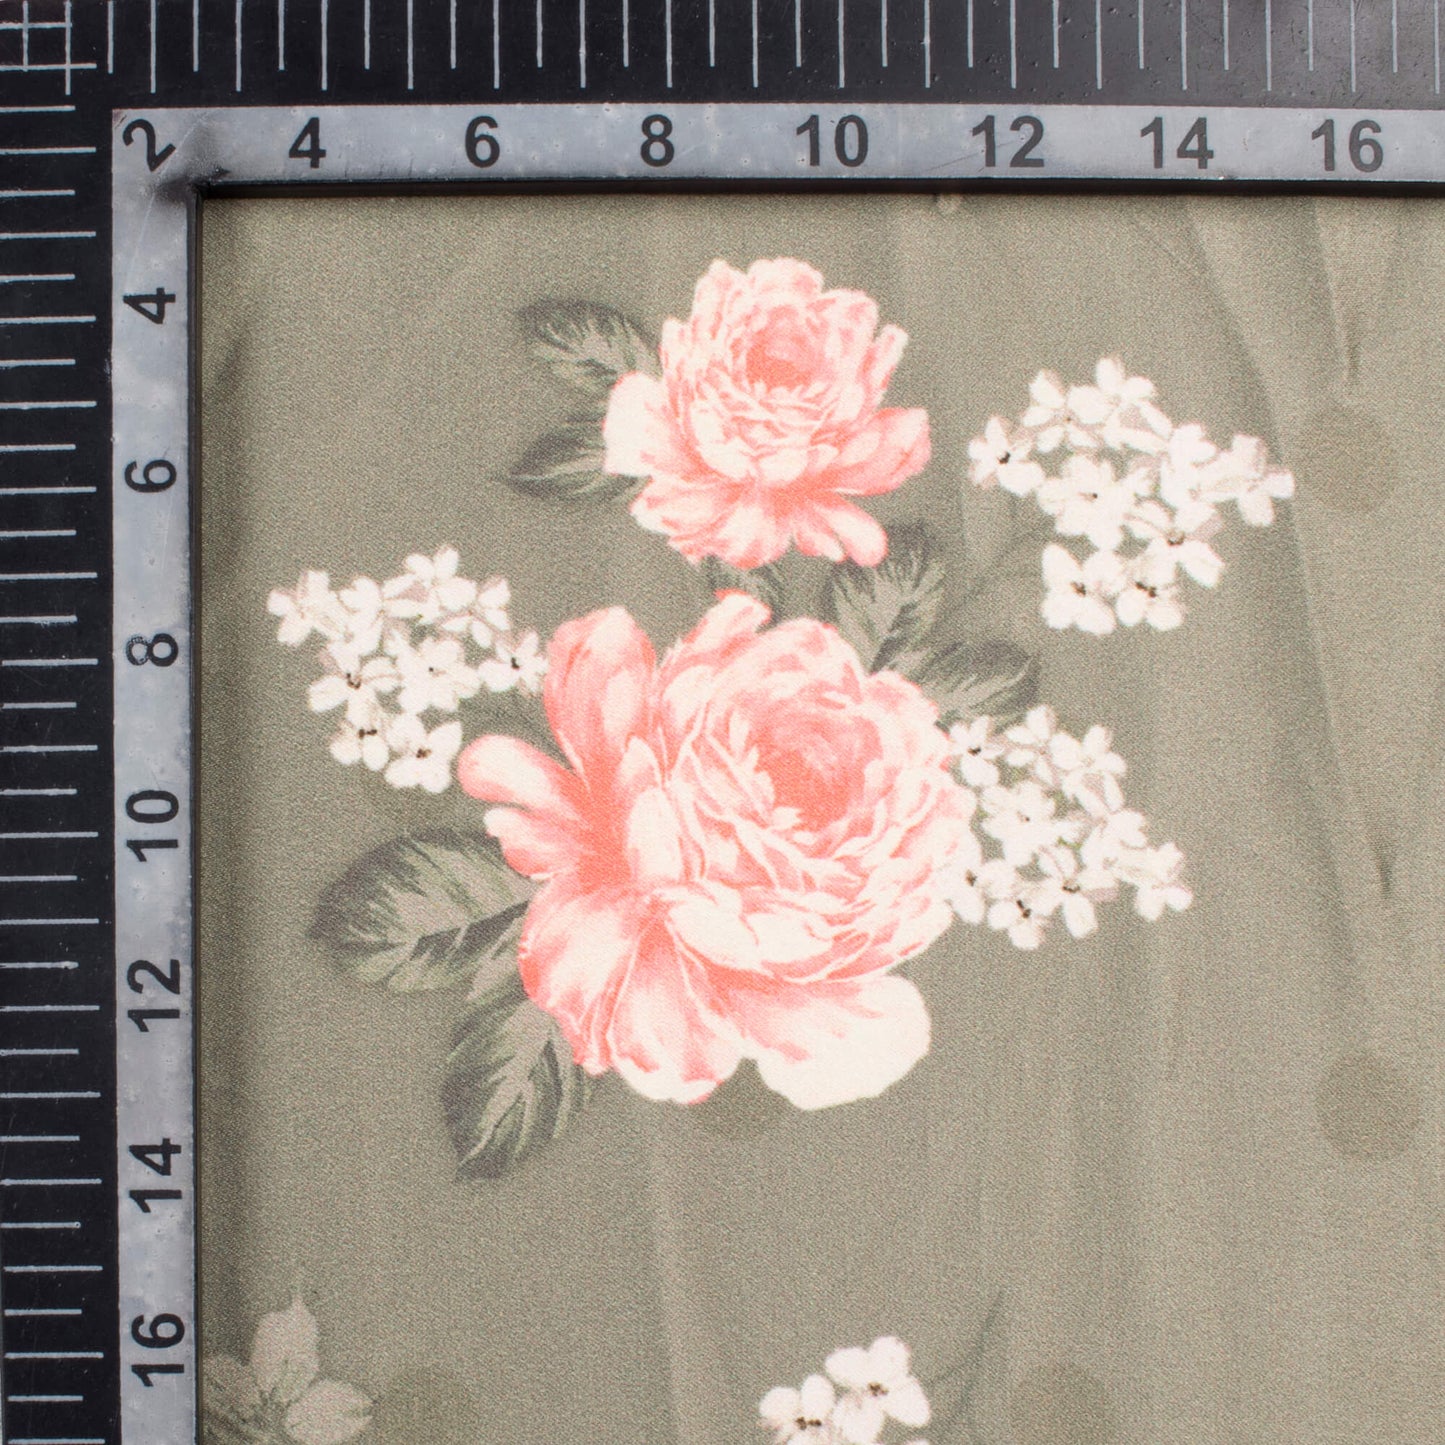 Stone Grey And Carnation Pink Floral Pattern Digital Print Lush Satin Fabric